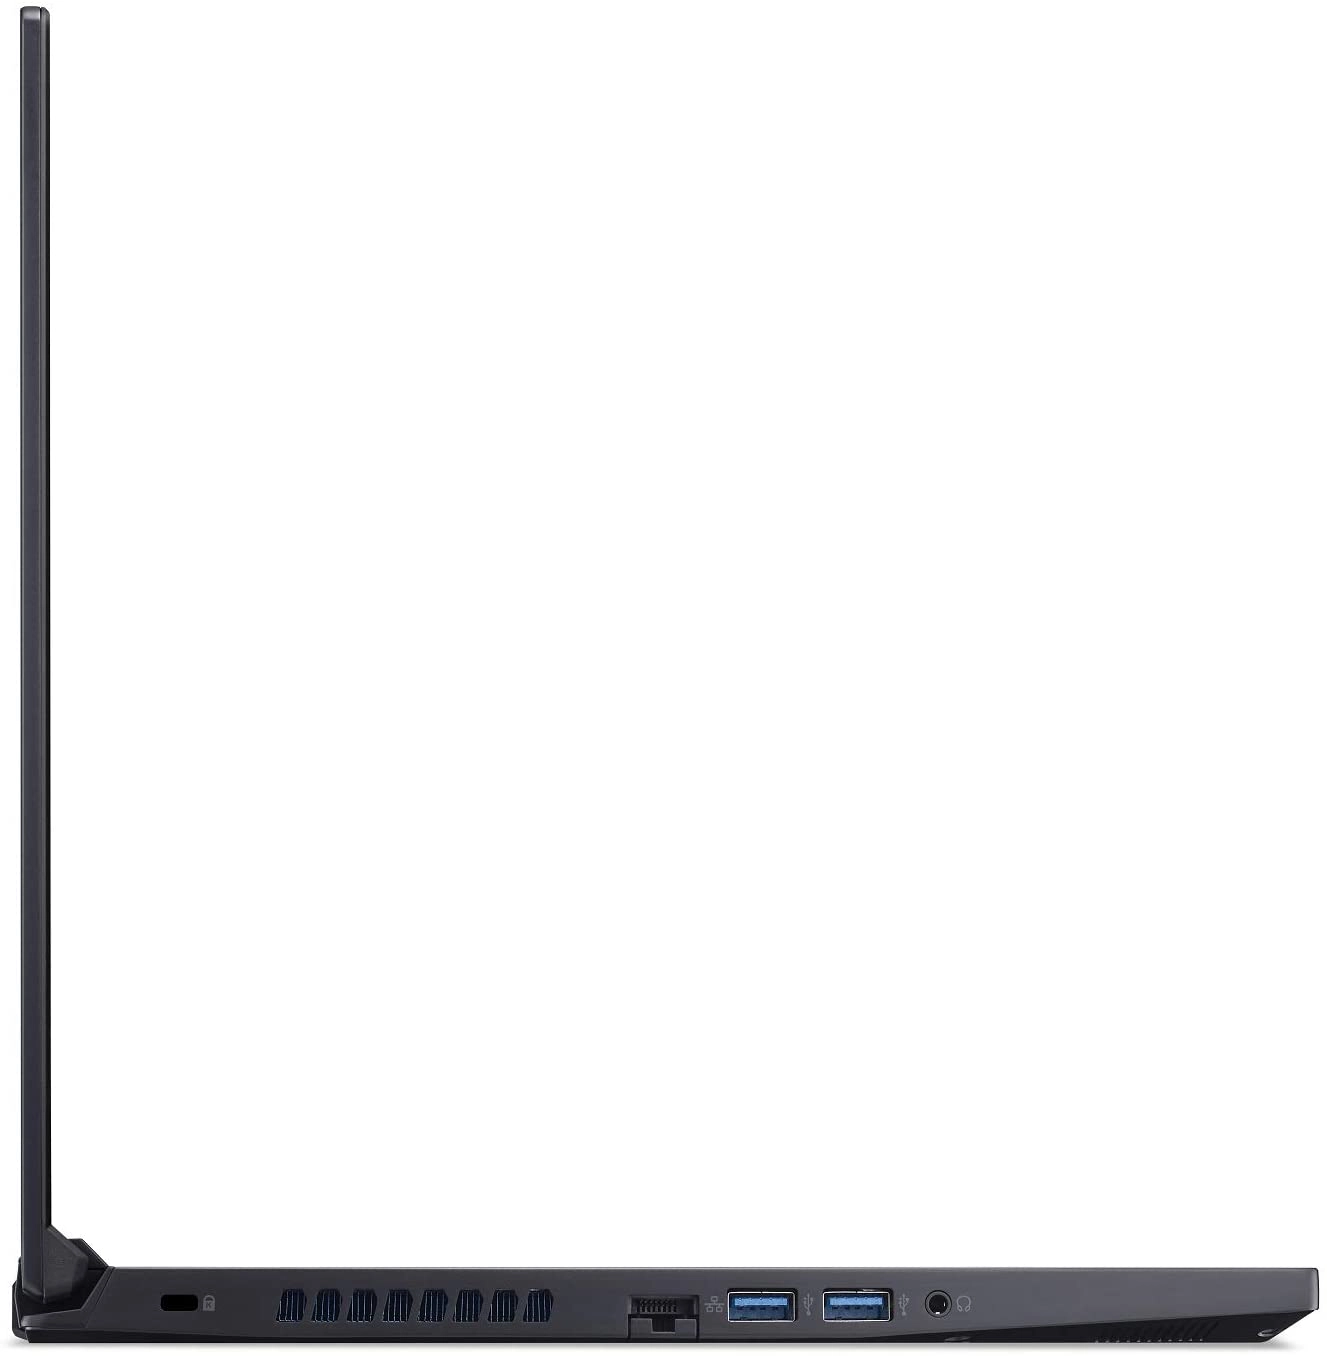 Acer PT315-52-78W1 laptop image